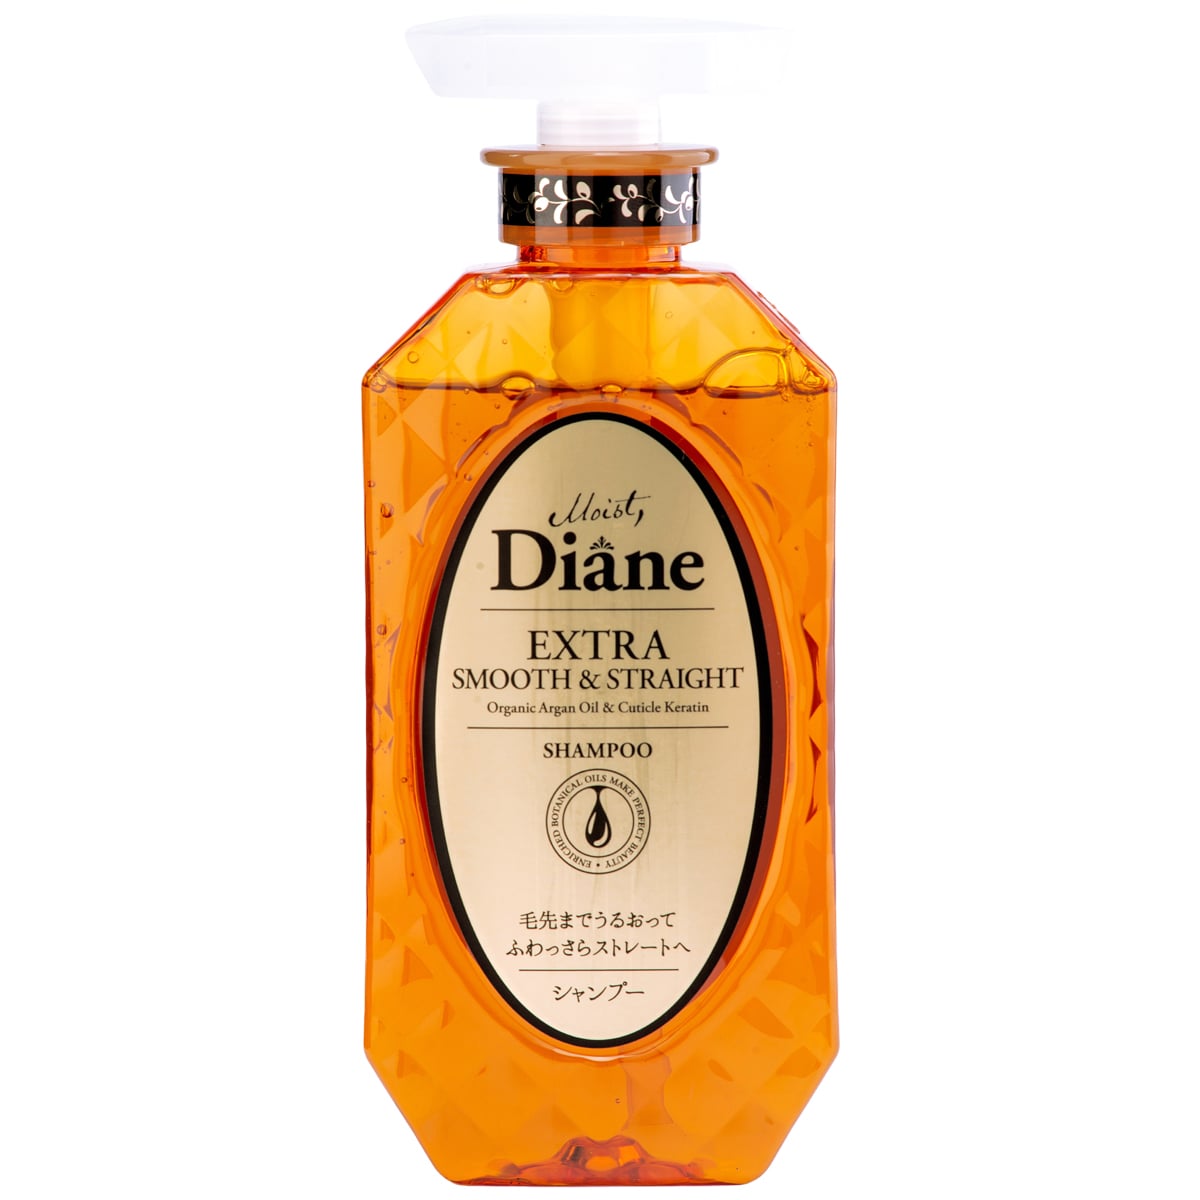 Moist Diane Кератиновый шампунь Гладкость, 450 мл (Moist Diane, Moist)